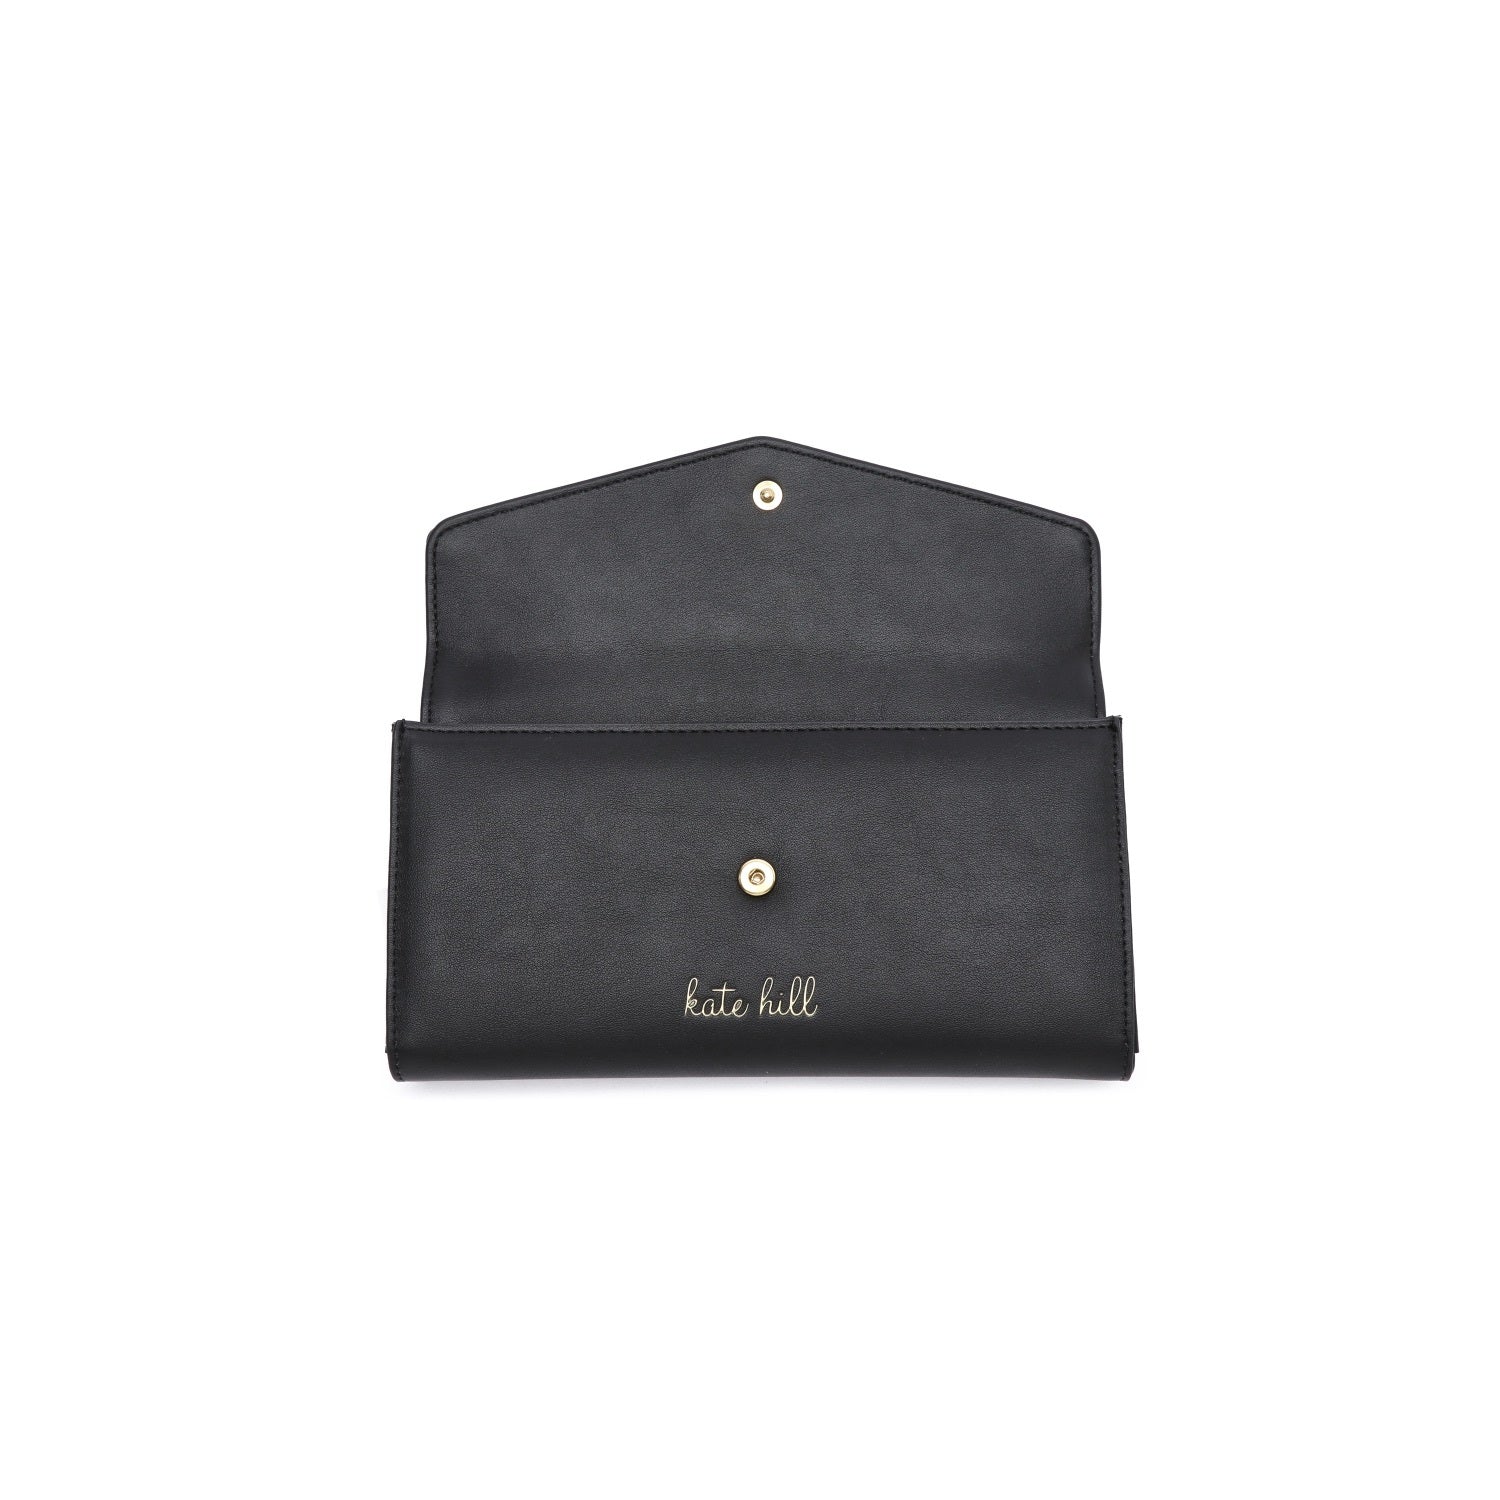 Kate Hill - Asher purse KH-22026 - Black-3